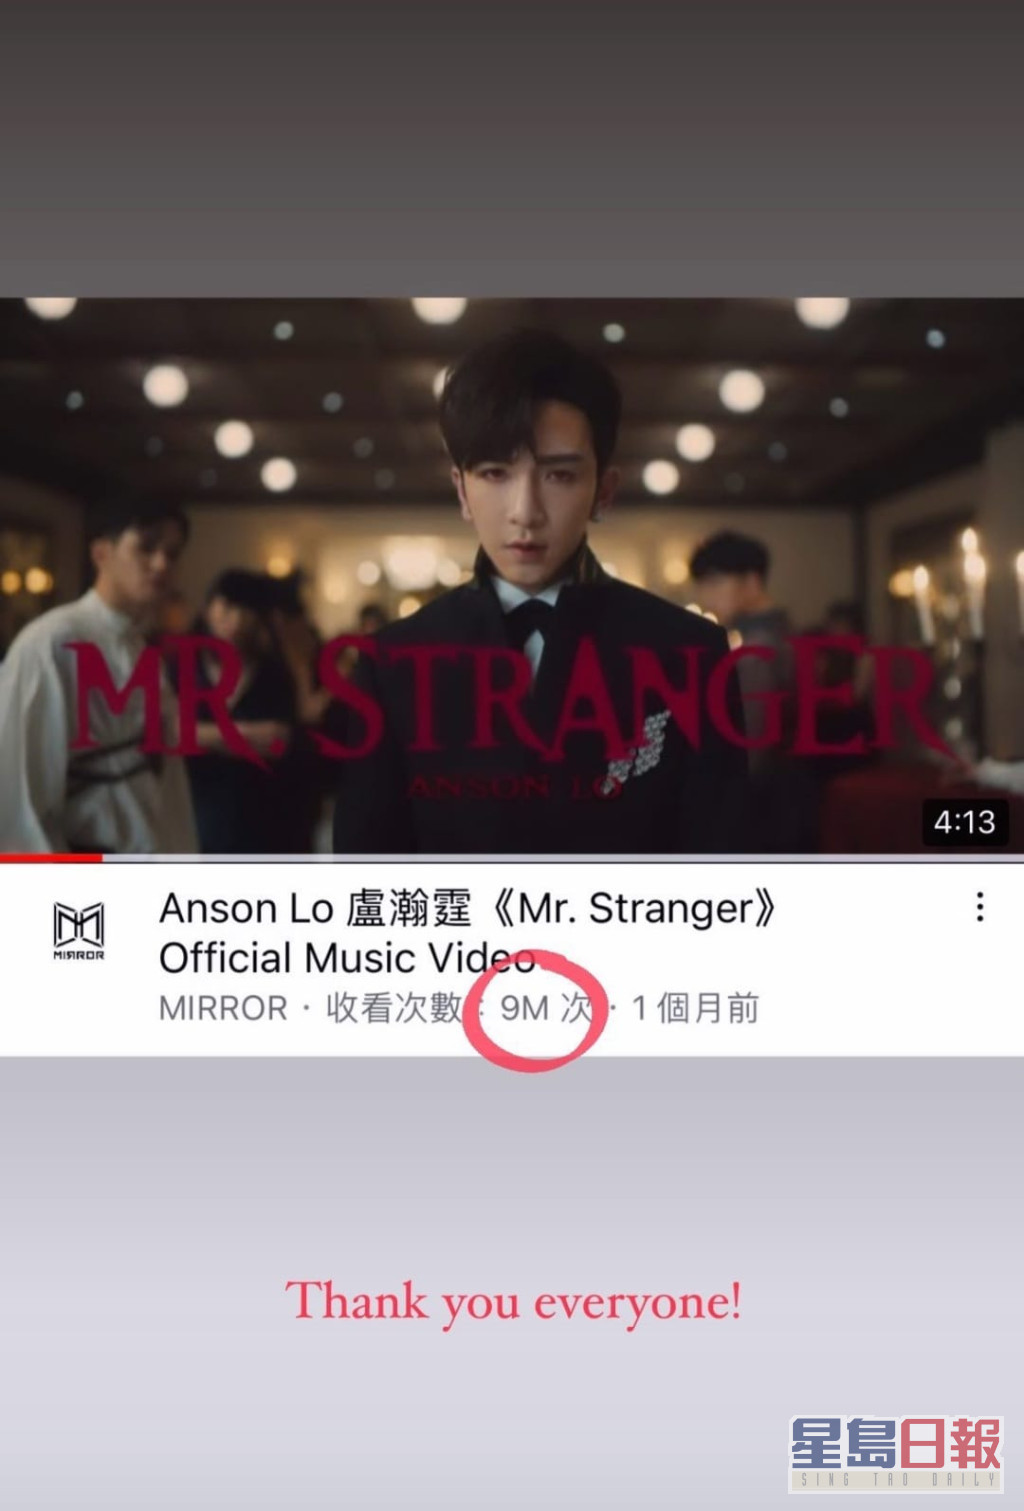 《Mr. Stranger》MV在YouTube上架個幾月，點擊衝破900萬。